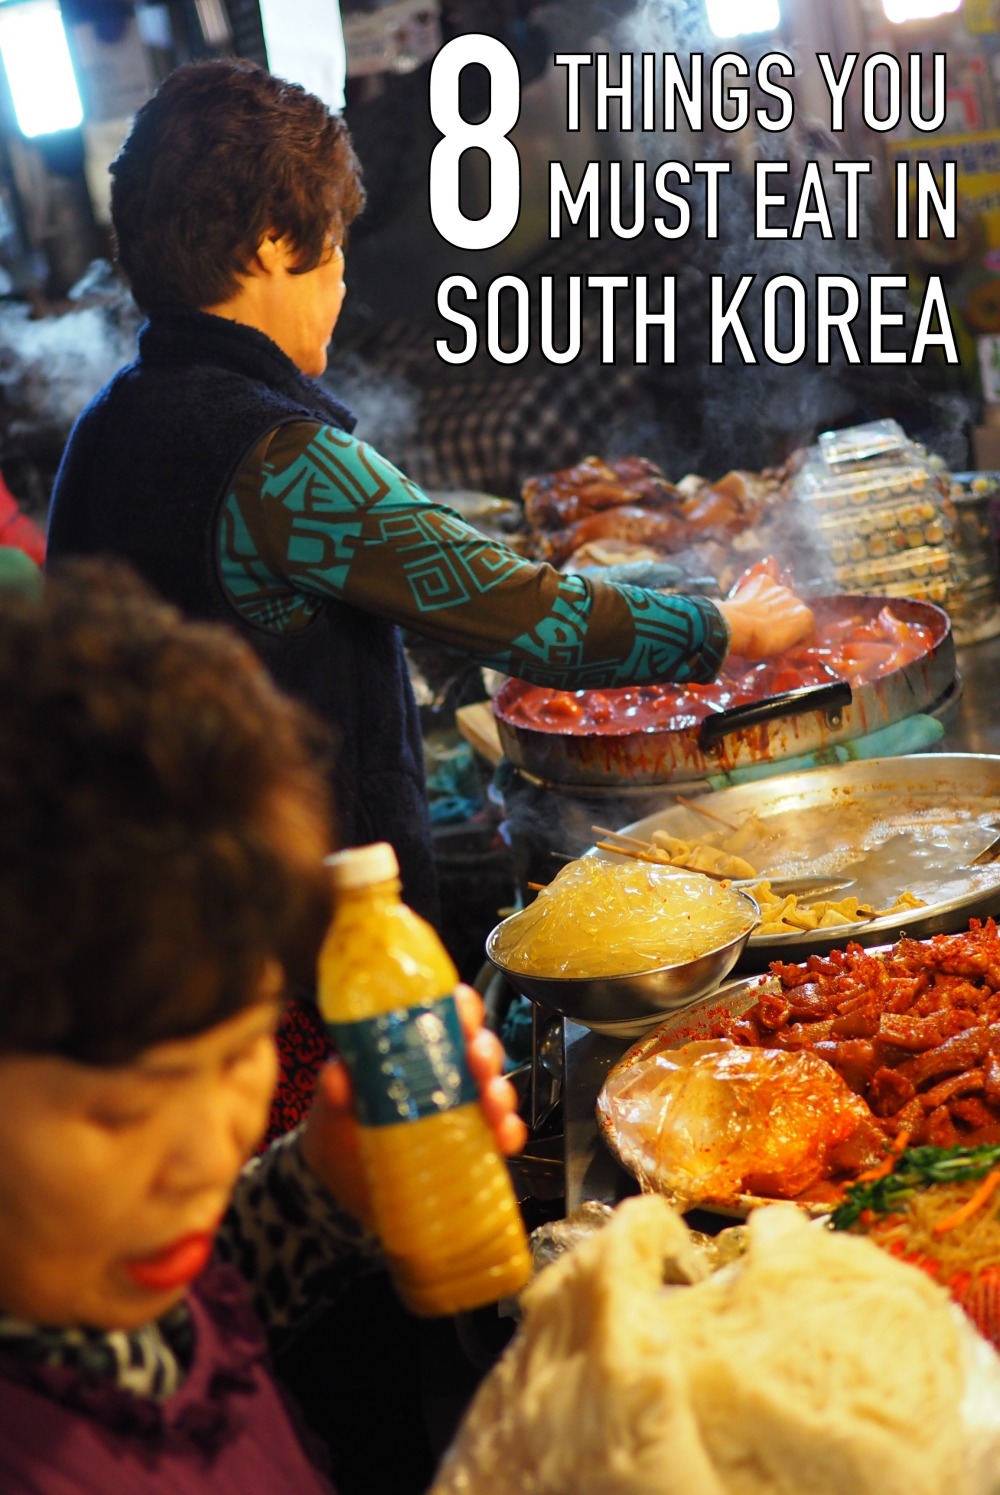 Ludicrous Feed eats Korean Food!